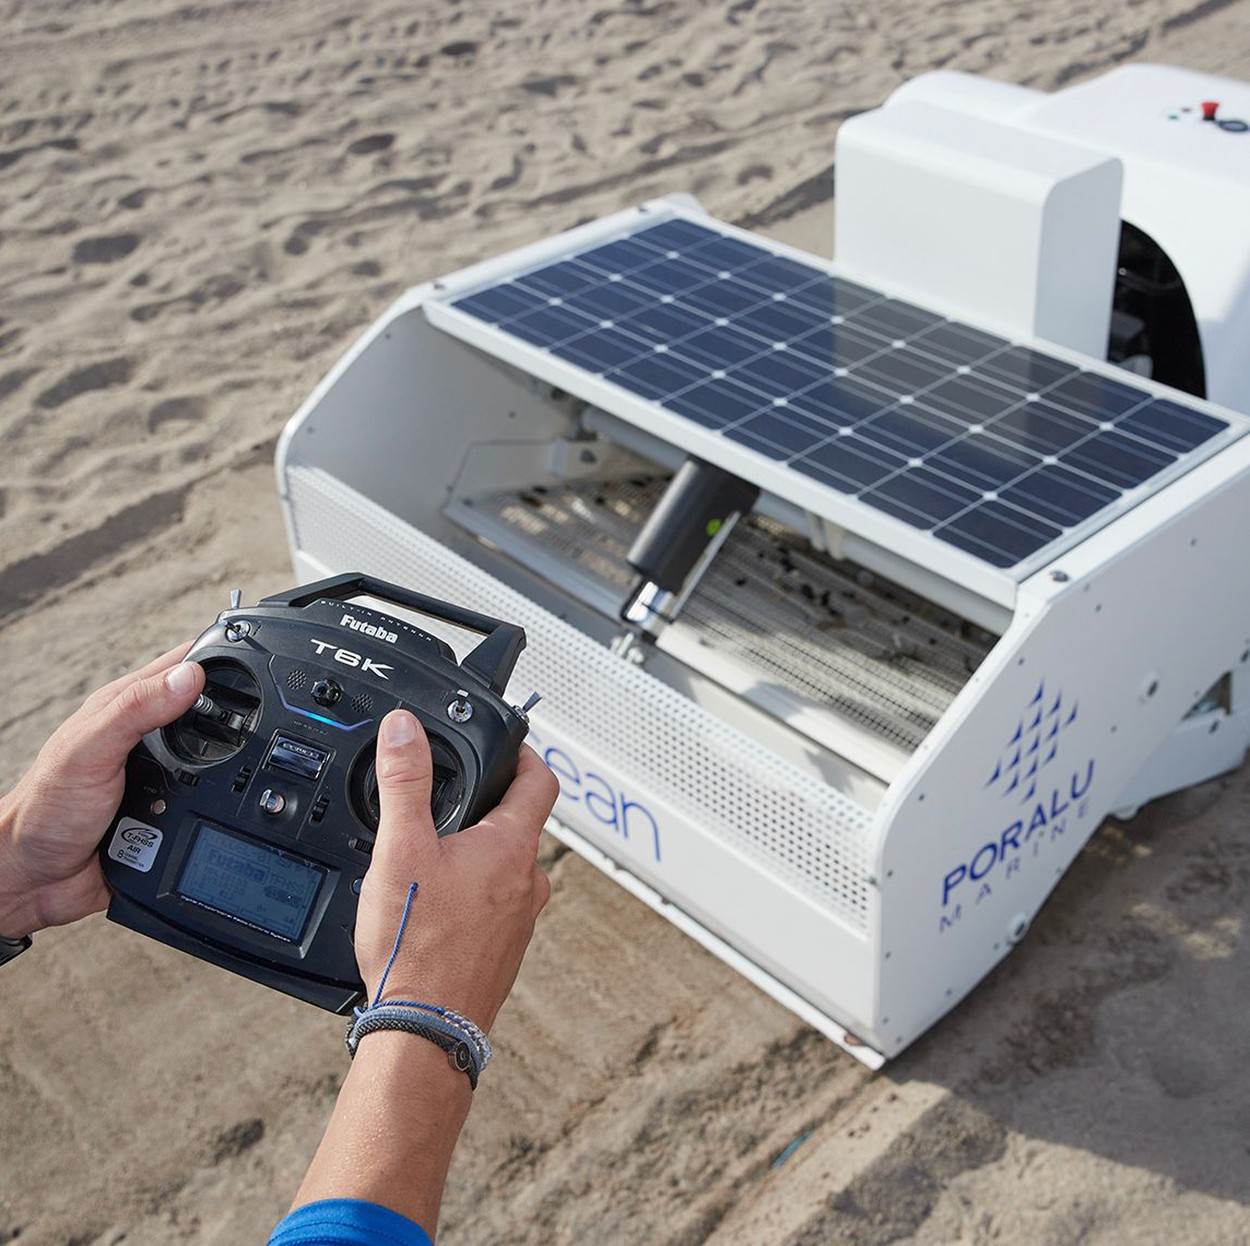  BeBot;robot;beach;clean;rubbish;trash;plastic;solar powered;remote 